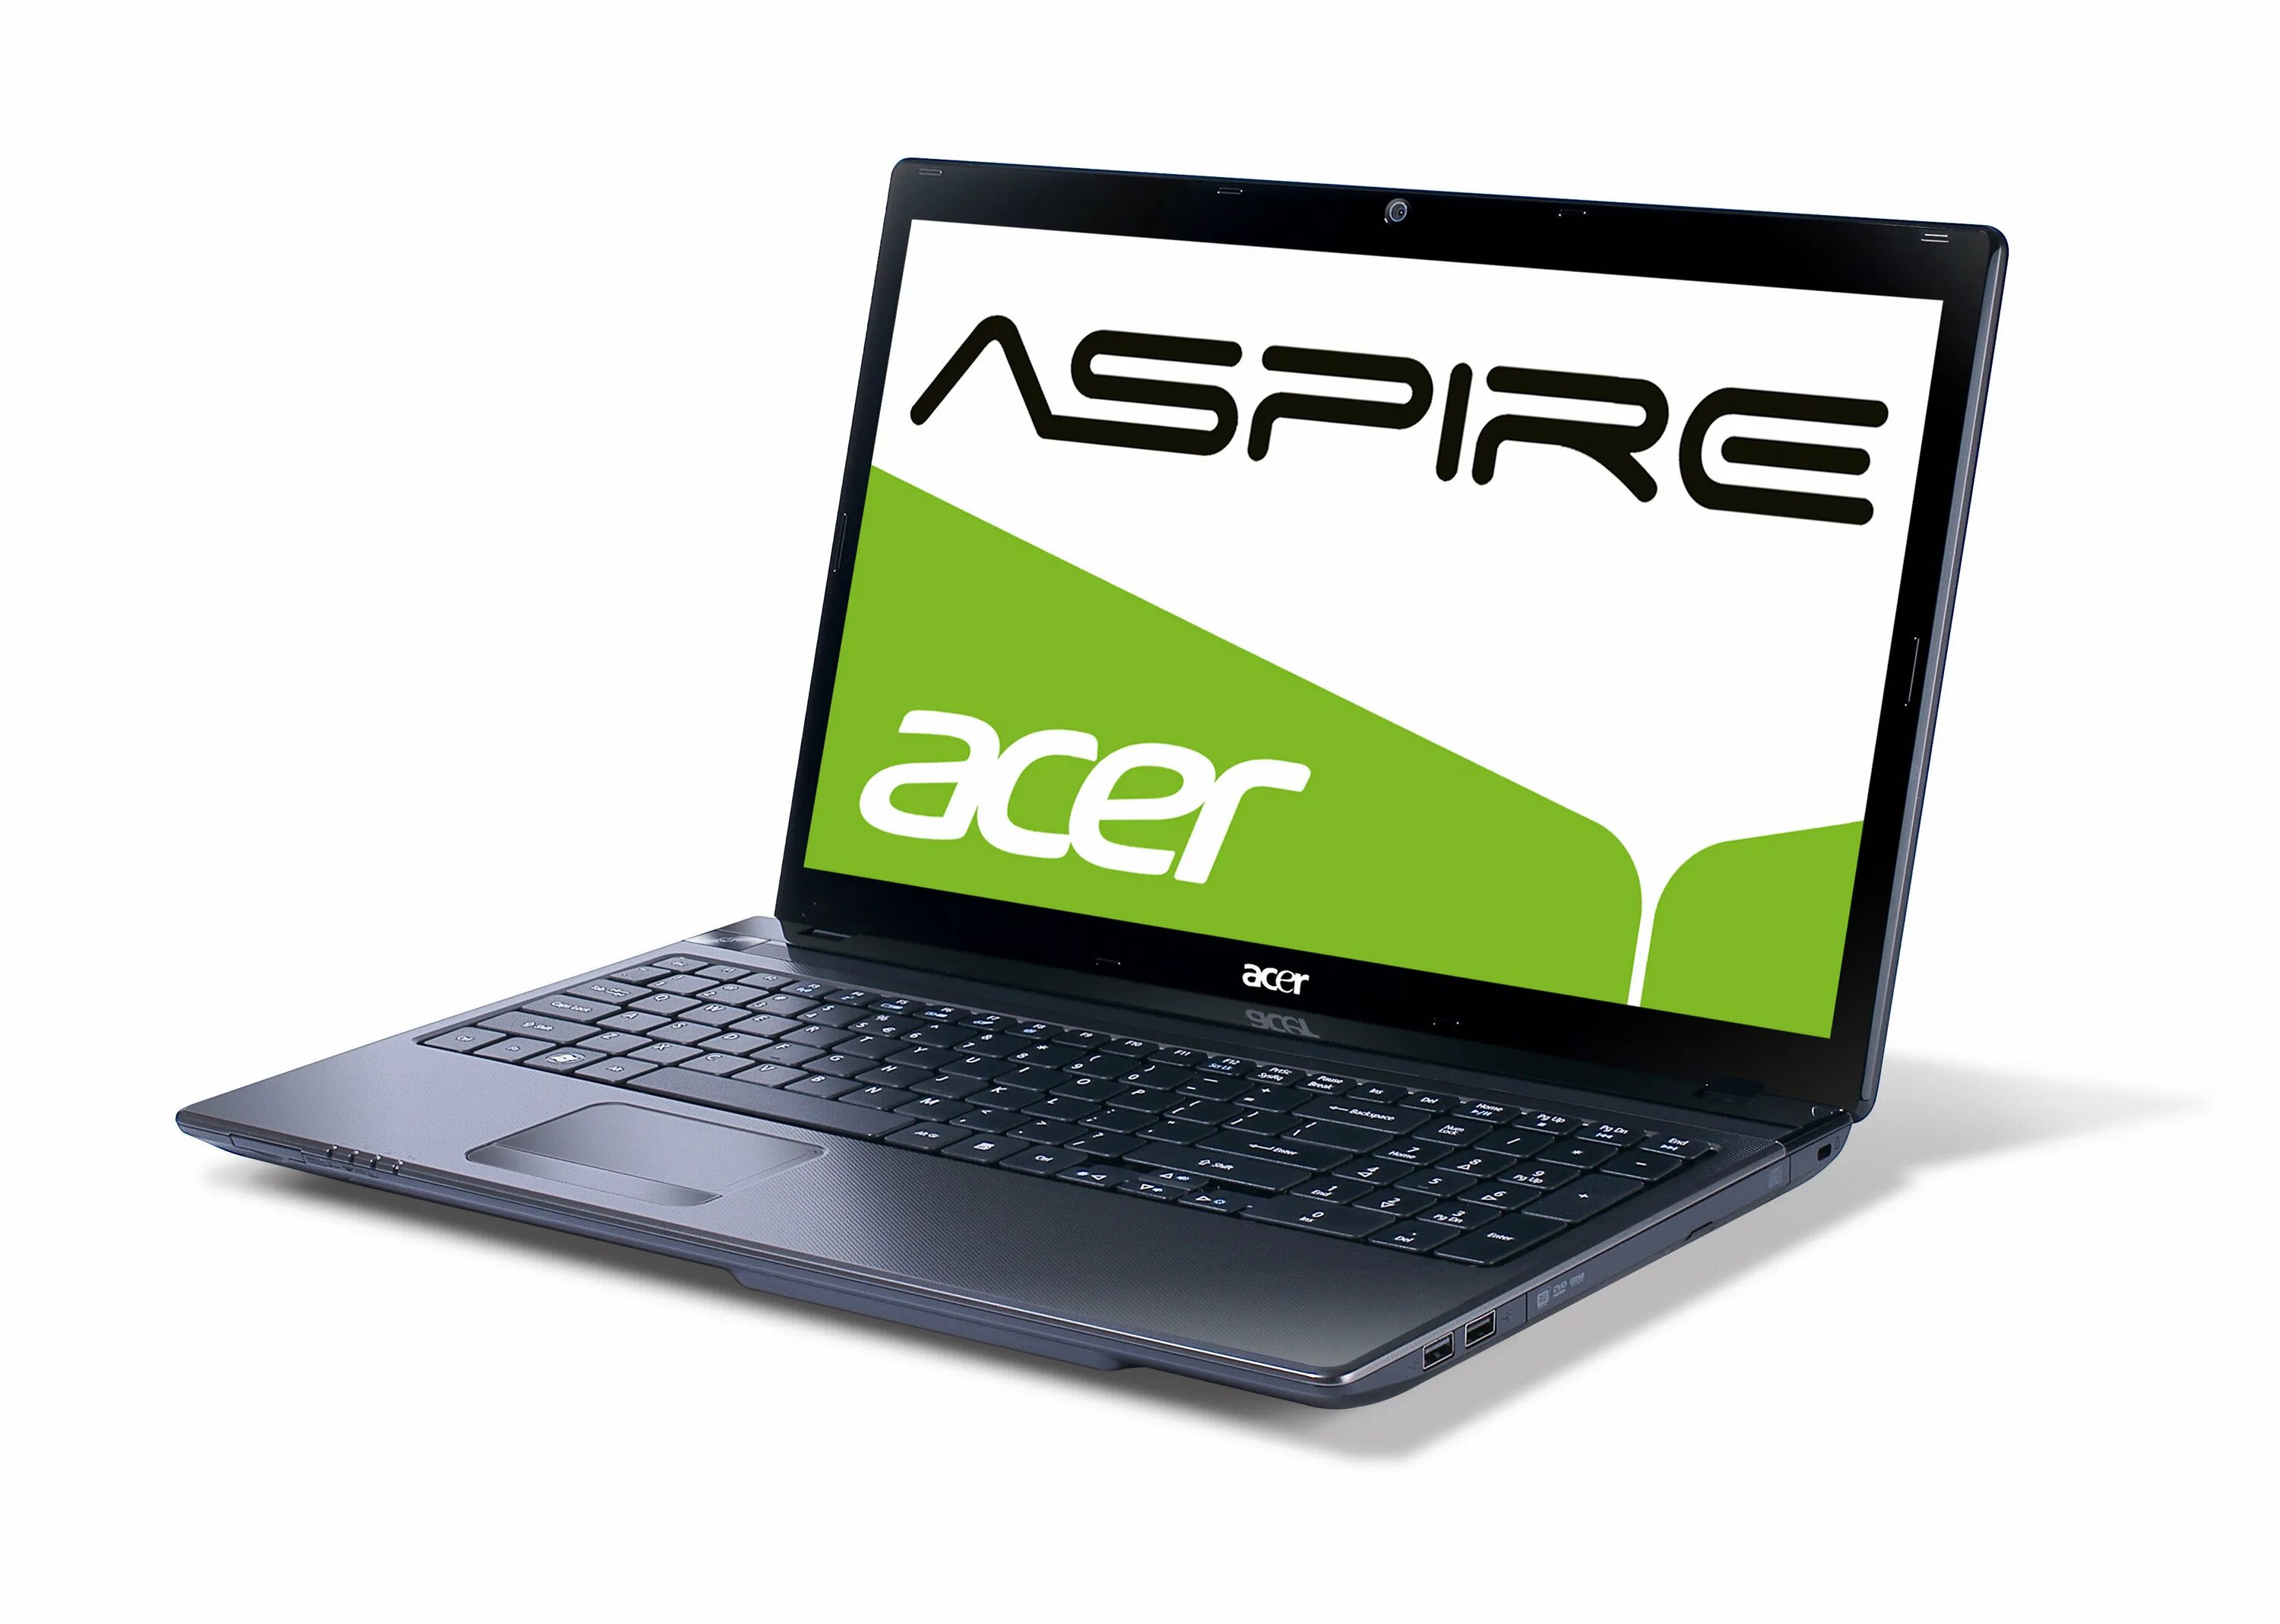 Acer 5750g. Асер Aspire 5750g. Ноутбуки Acer ноутбук Acer Aspire 5750g. Acer Aspire 5750g-32354g32mnkk.